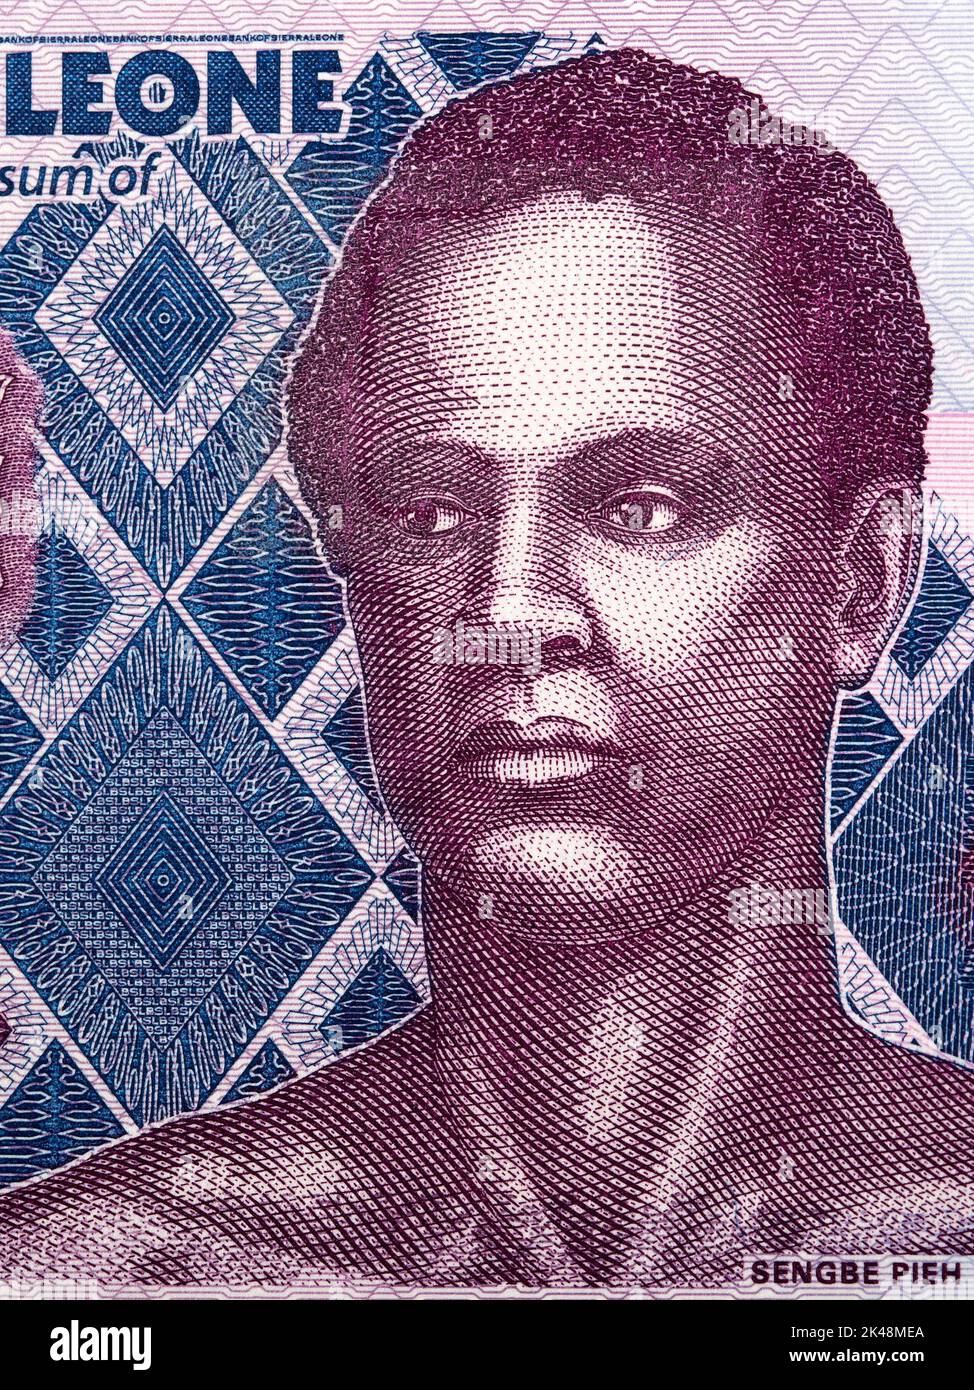 Sengbe Pieh a portrait from Sierra Leonean money - Leone Stock Photo